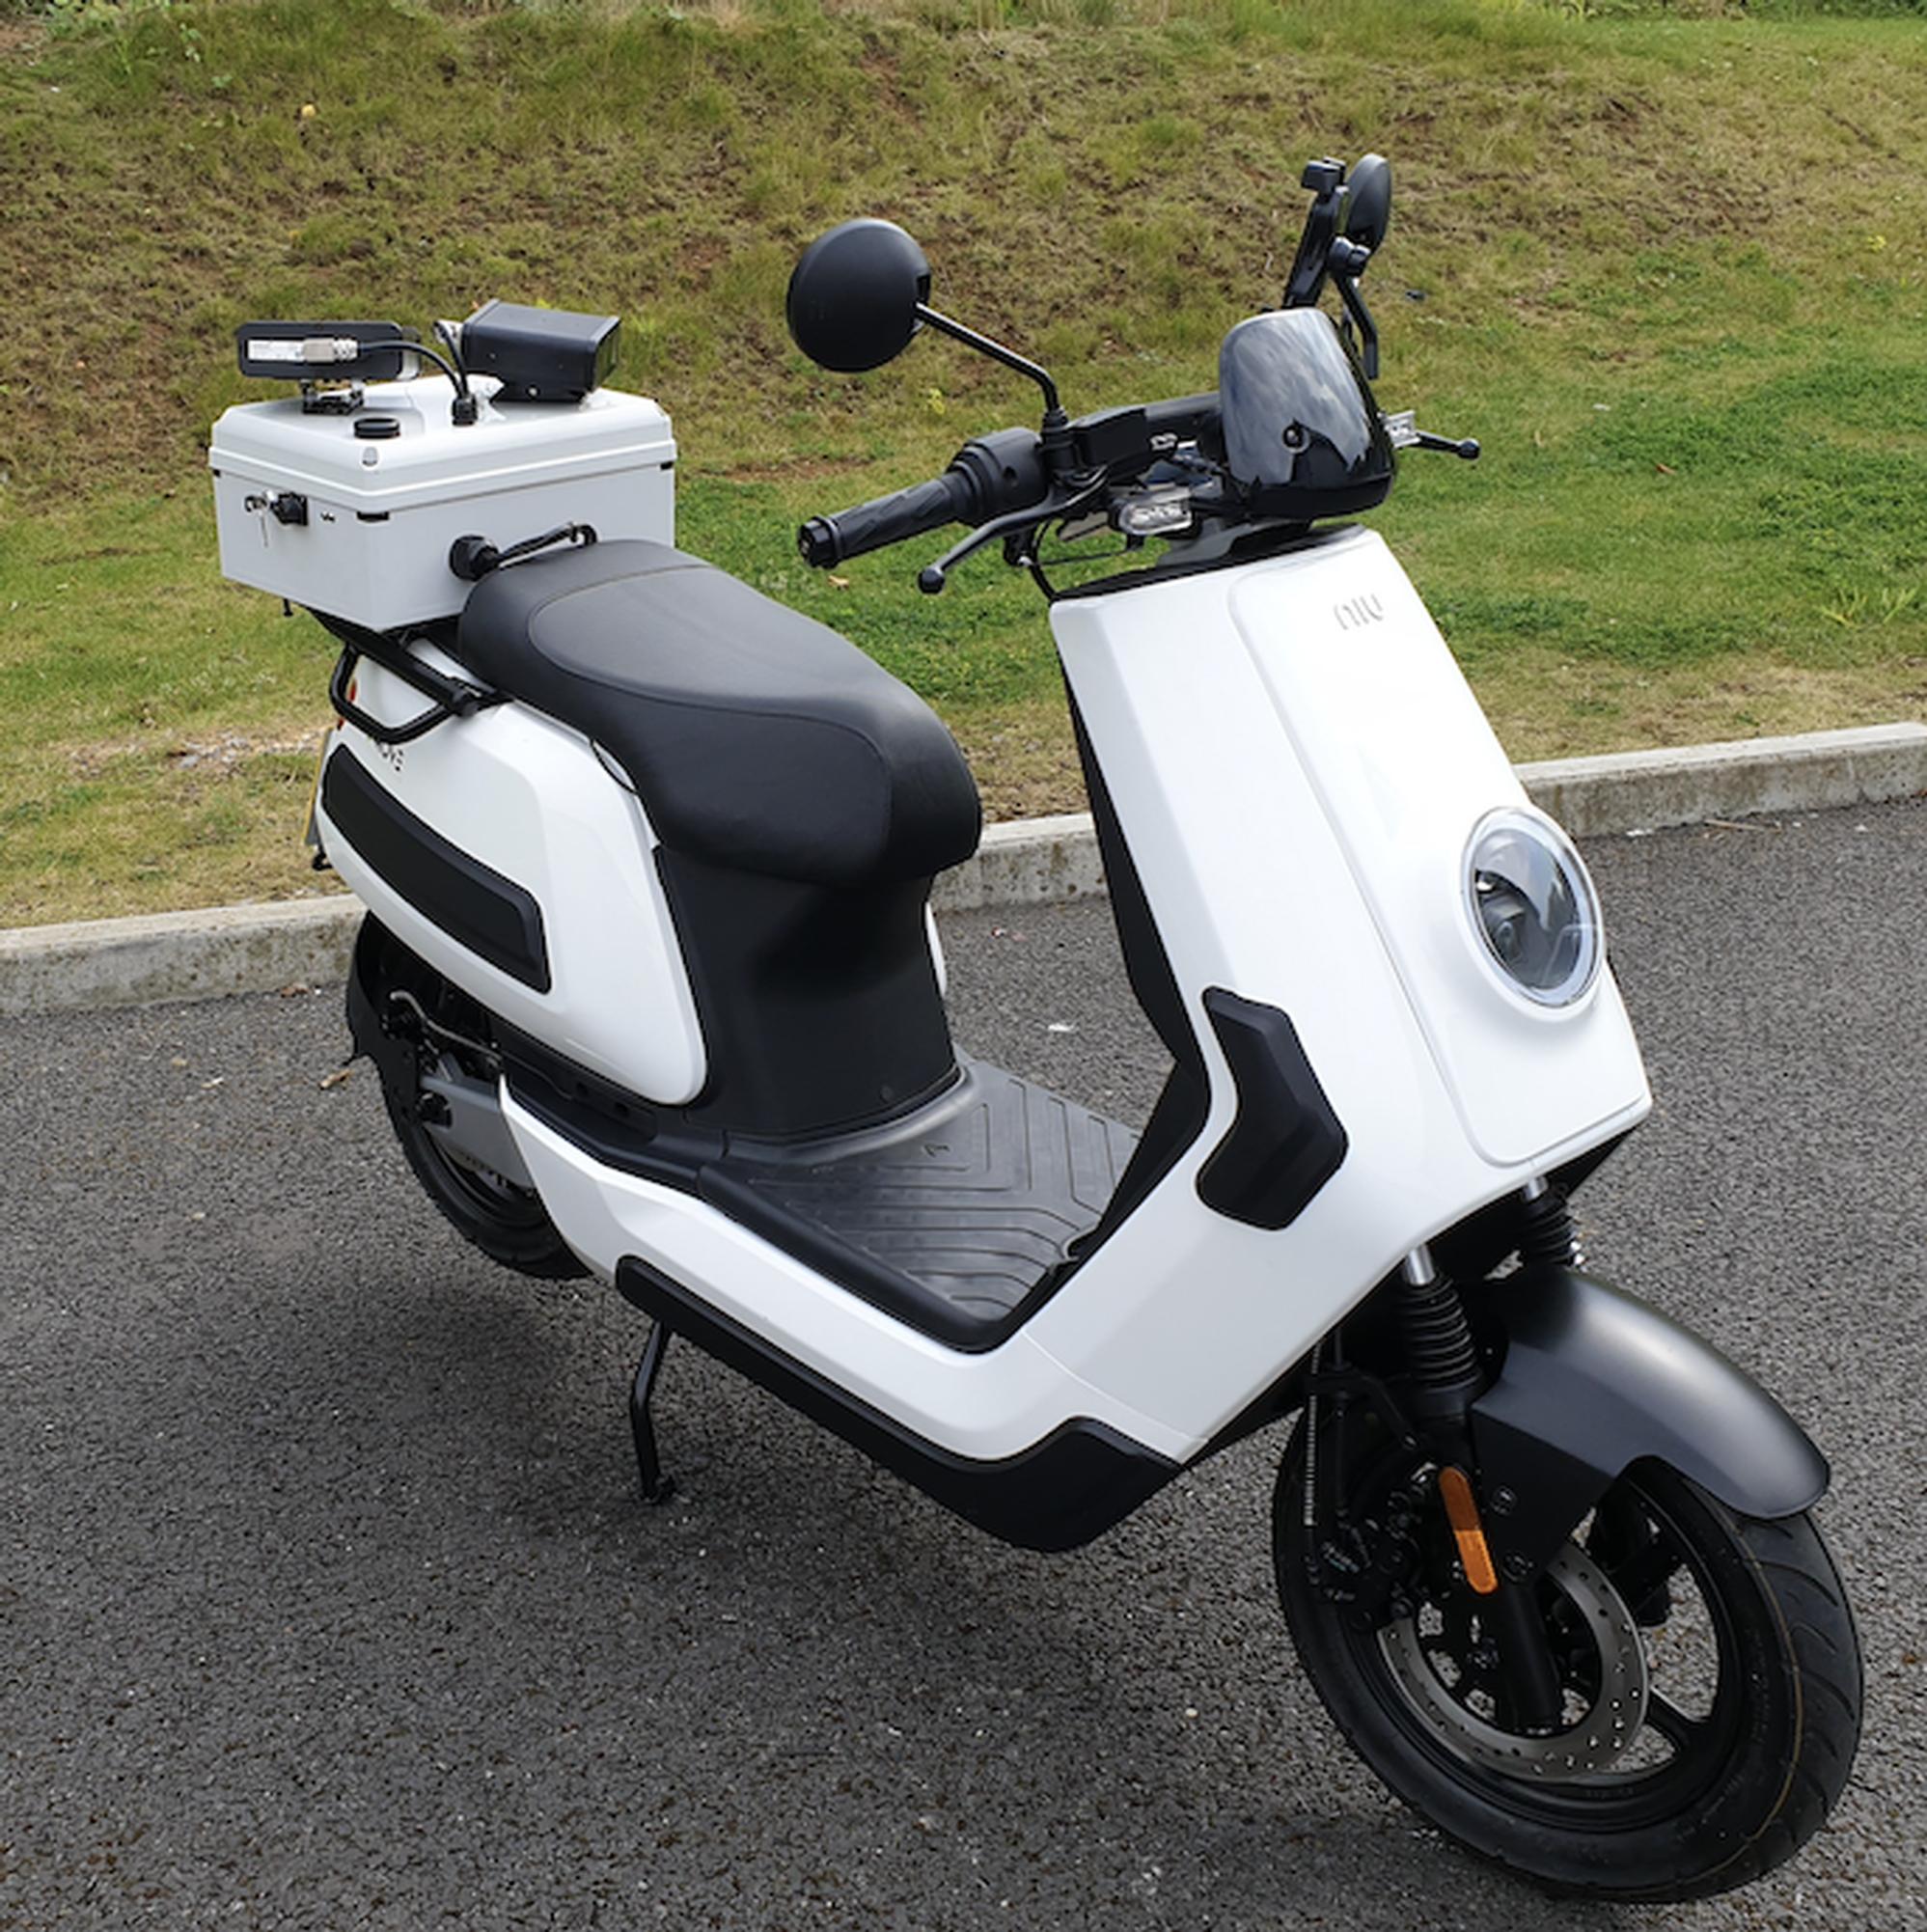 Videalert’s new MEV-B is based on the Niu Cargo bike from Niu Technologies